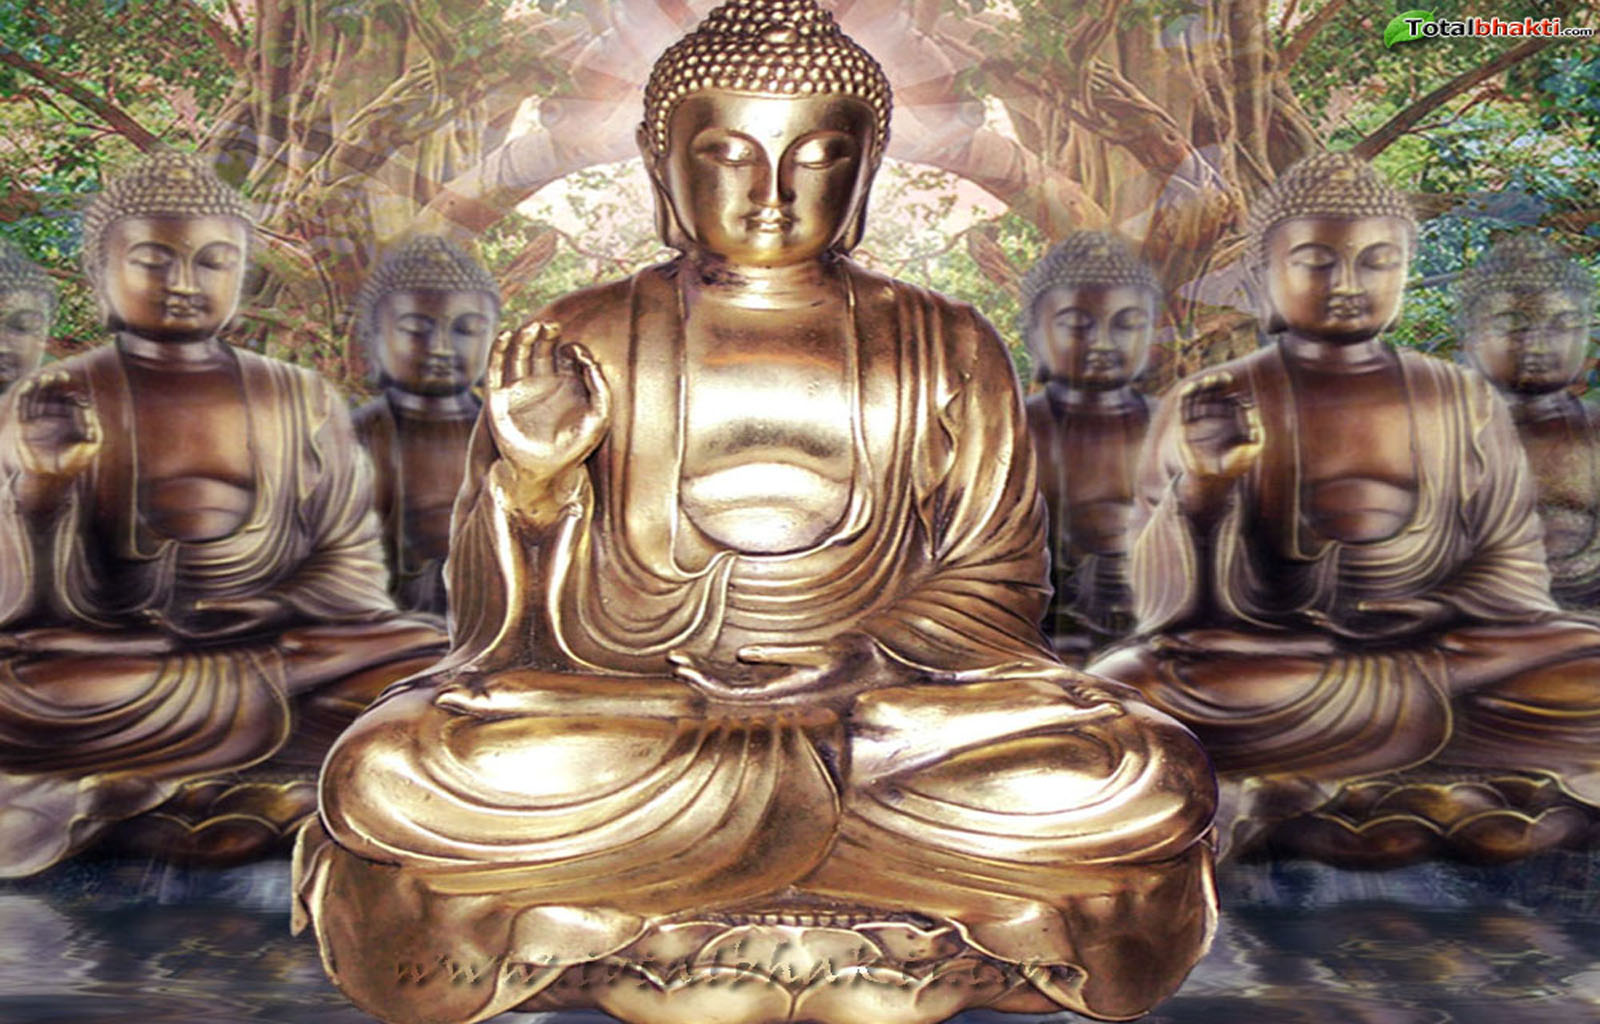 http://2.bp.blogspot.com/-kHewKc-9PnQ/T7i9oSVg2rI/AAAAAAAAQZA/Jm-j_KKn1tc/s1600/Lord-Buddha-Peaceful+Wallpapers+(4).jpg